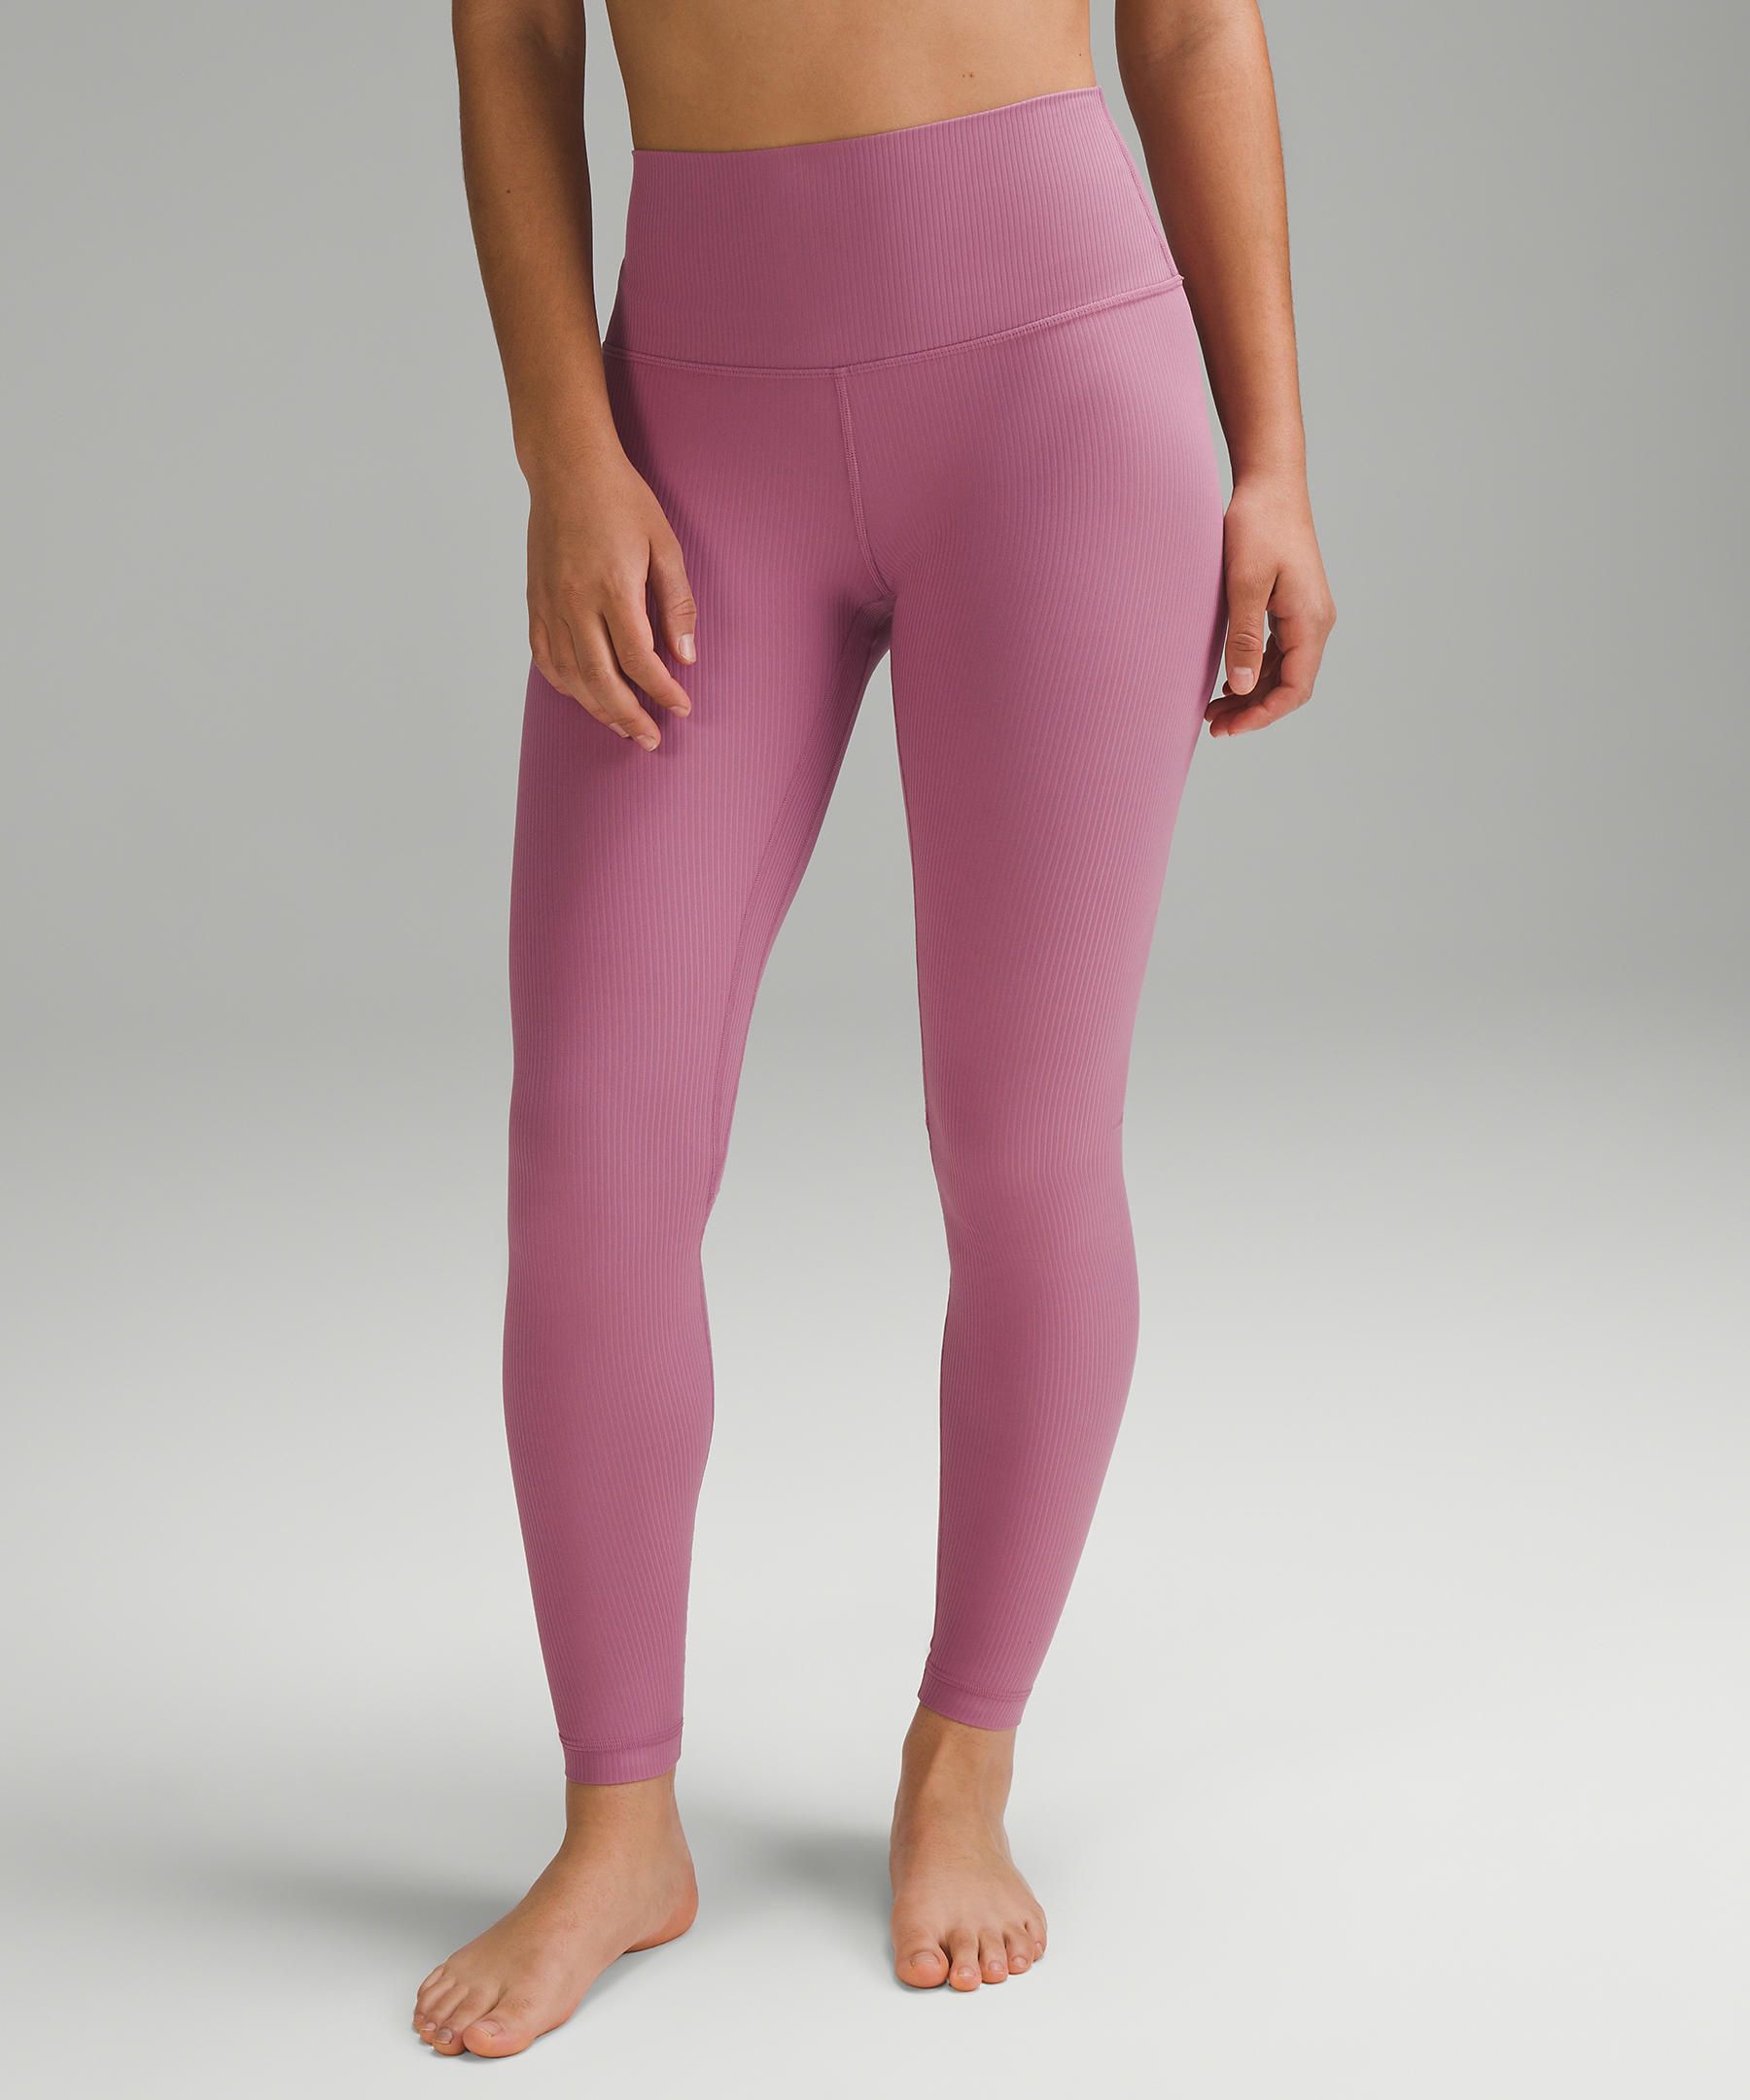 Lululemon align legging with pockets - size 6 | Lululemon align leggings,  High rise pants, Pants for women